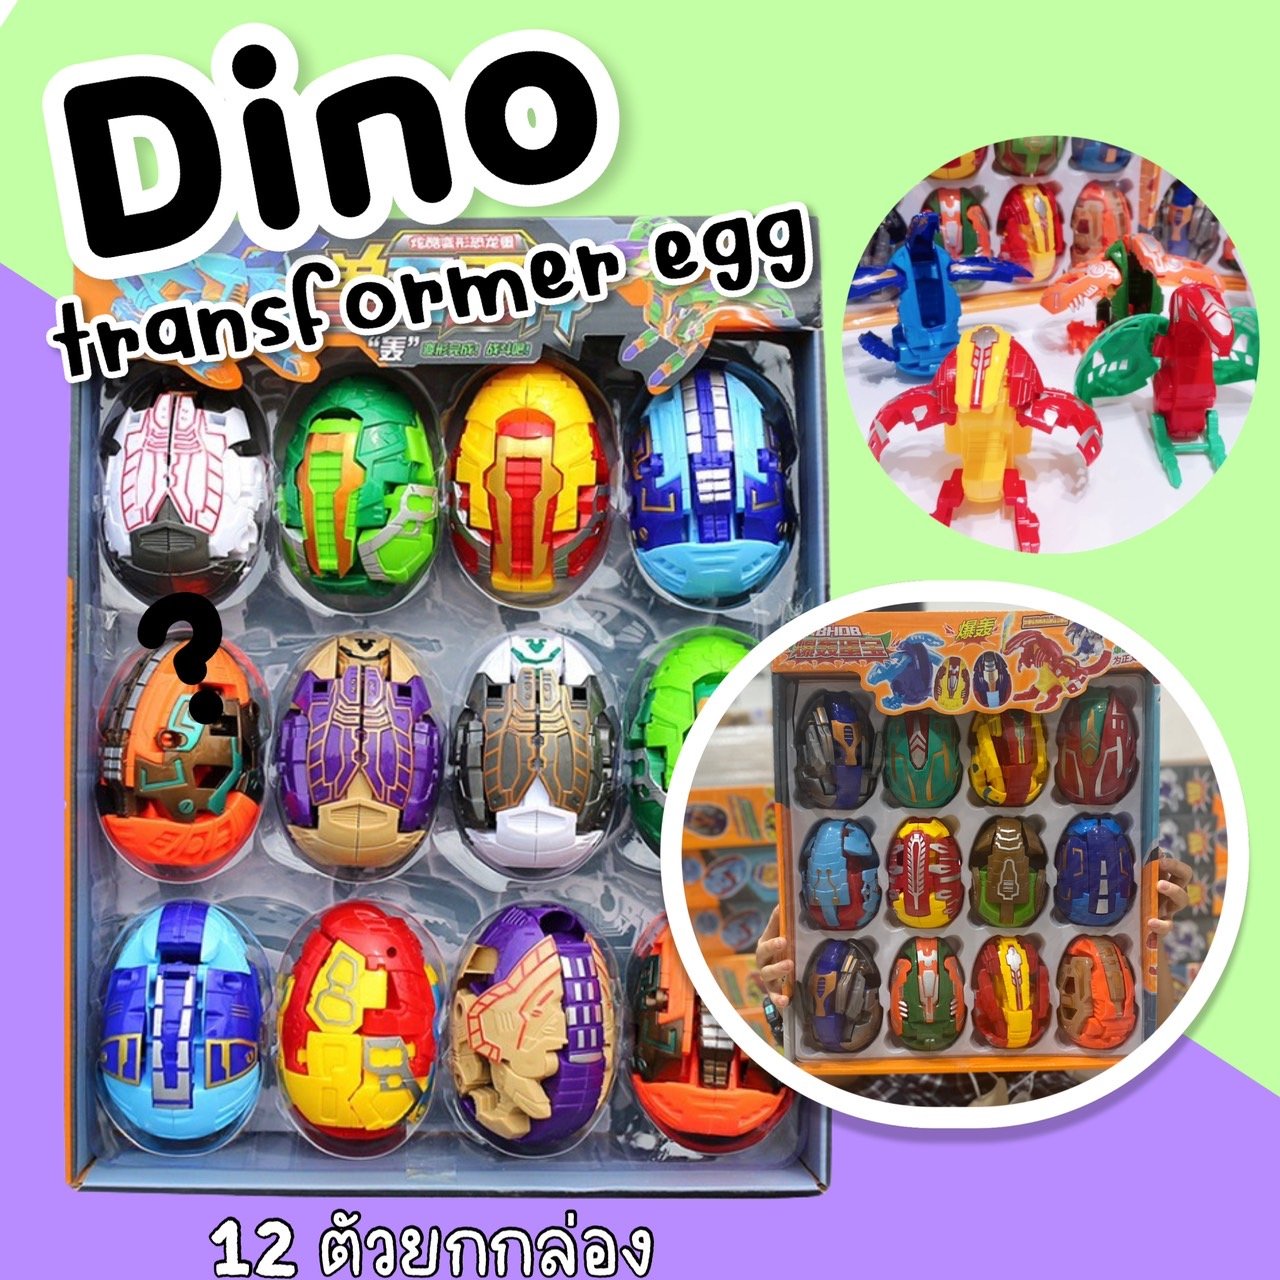 Dino tranformer eggs 